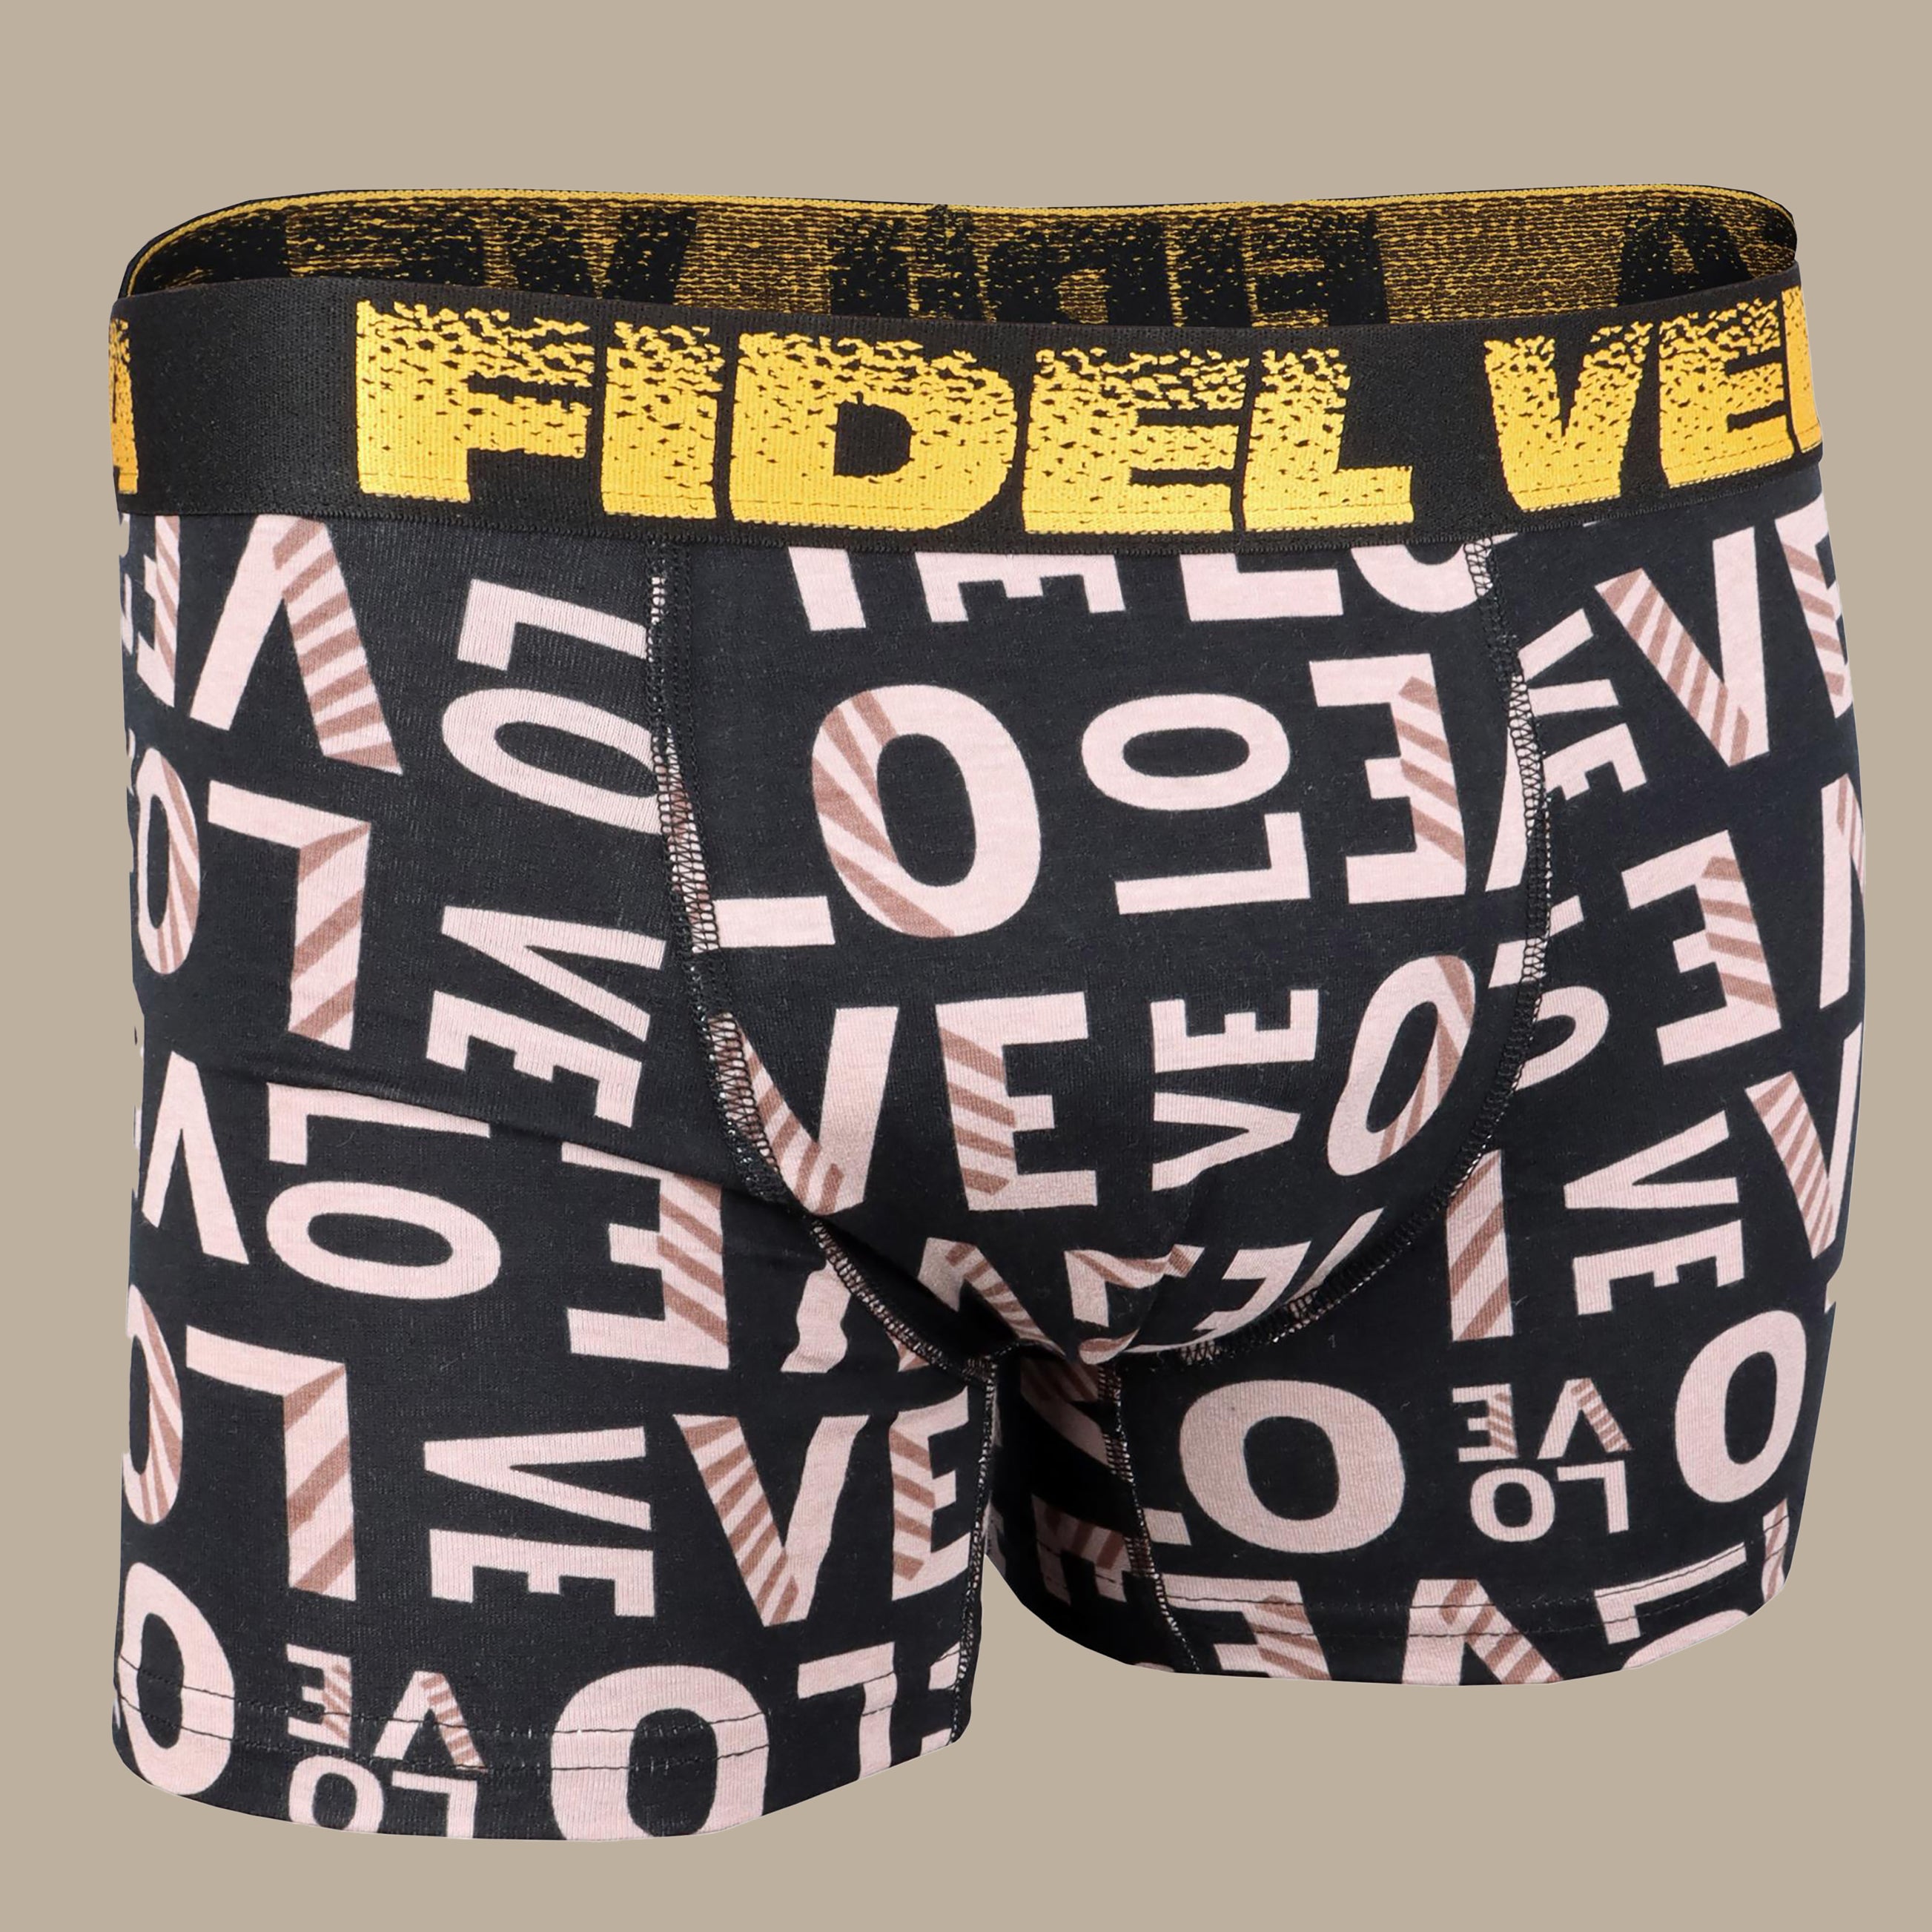 Fidel Verta Boxer Love | Black, Beige